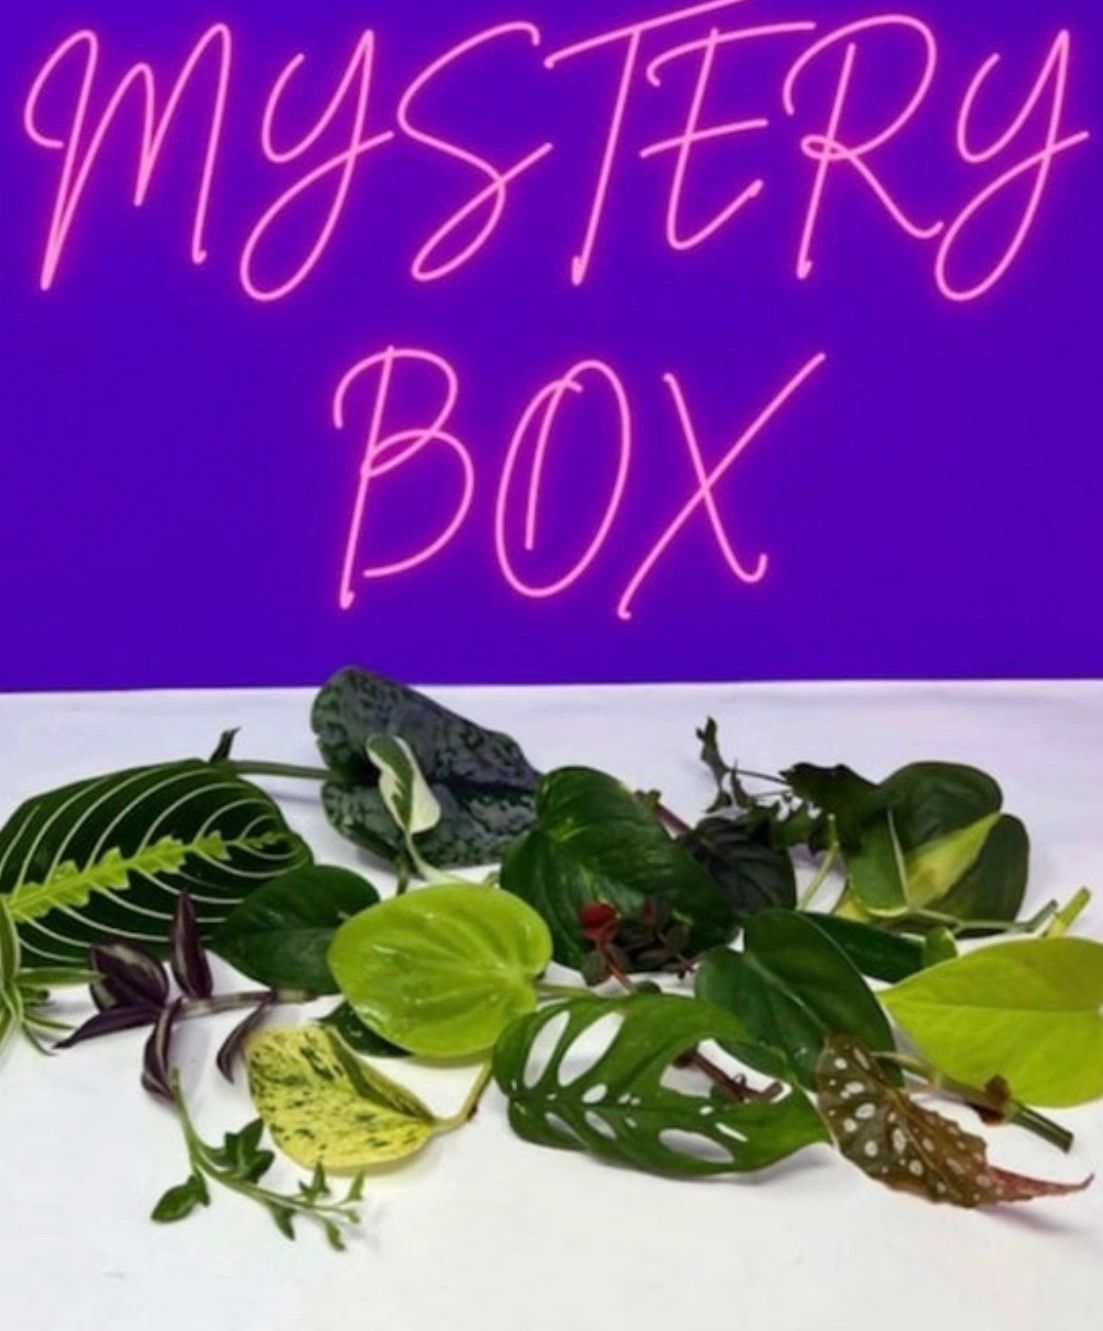 Mystery cuttings box!